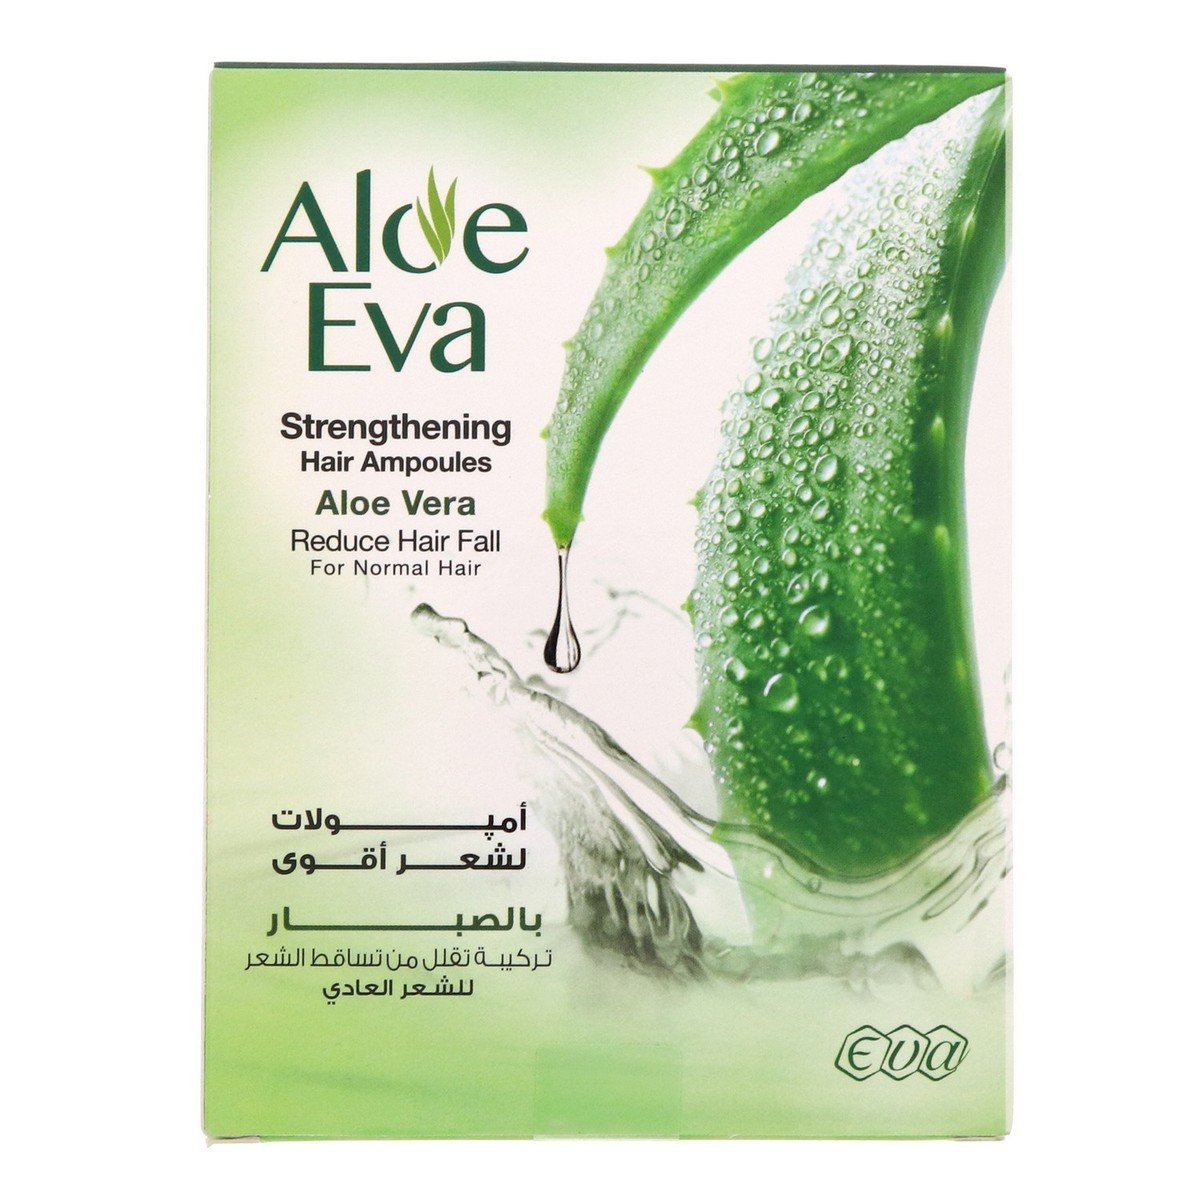 Aloe Eva Strengthening Hair Ampoules Reduce Hair Fall 4 x 15 ml